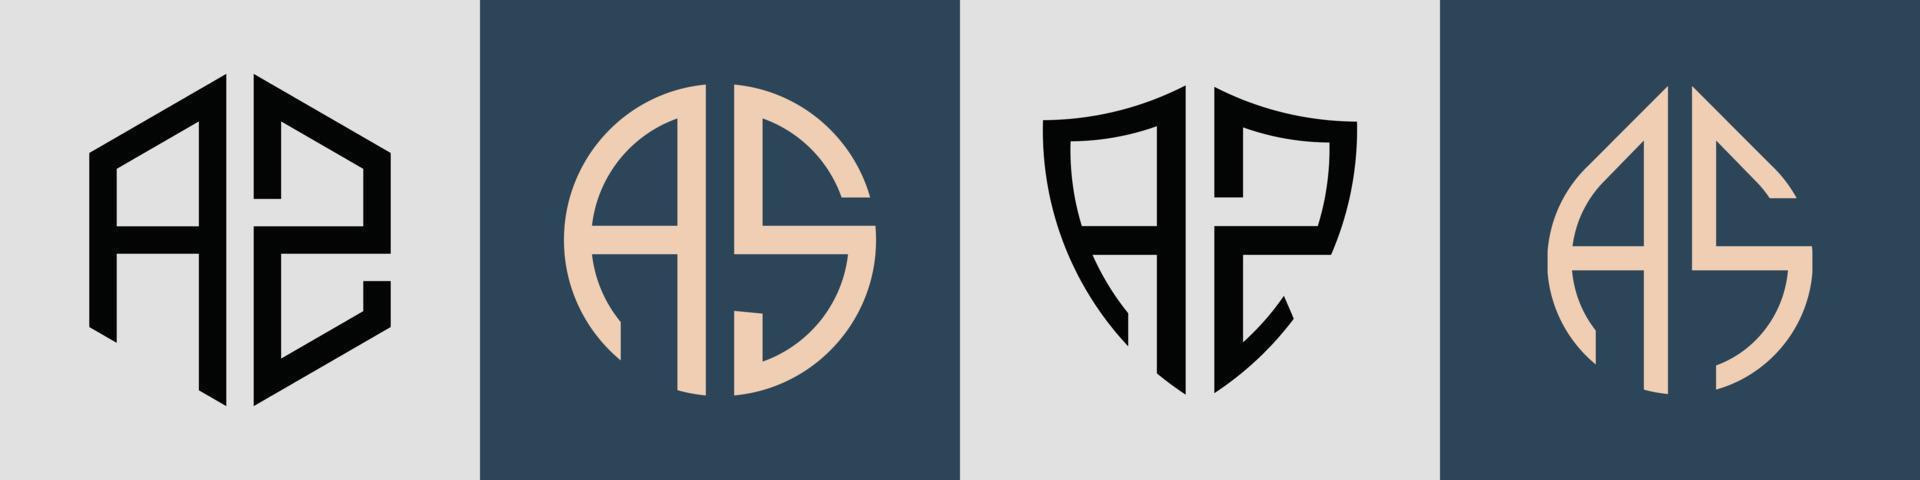 kreative einfache anfangsbuchstaben az-logo-designs-bündel. vektor